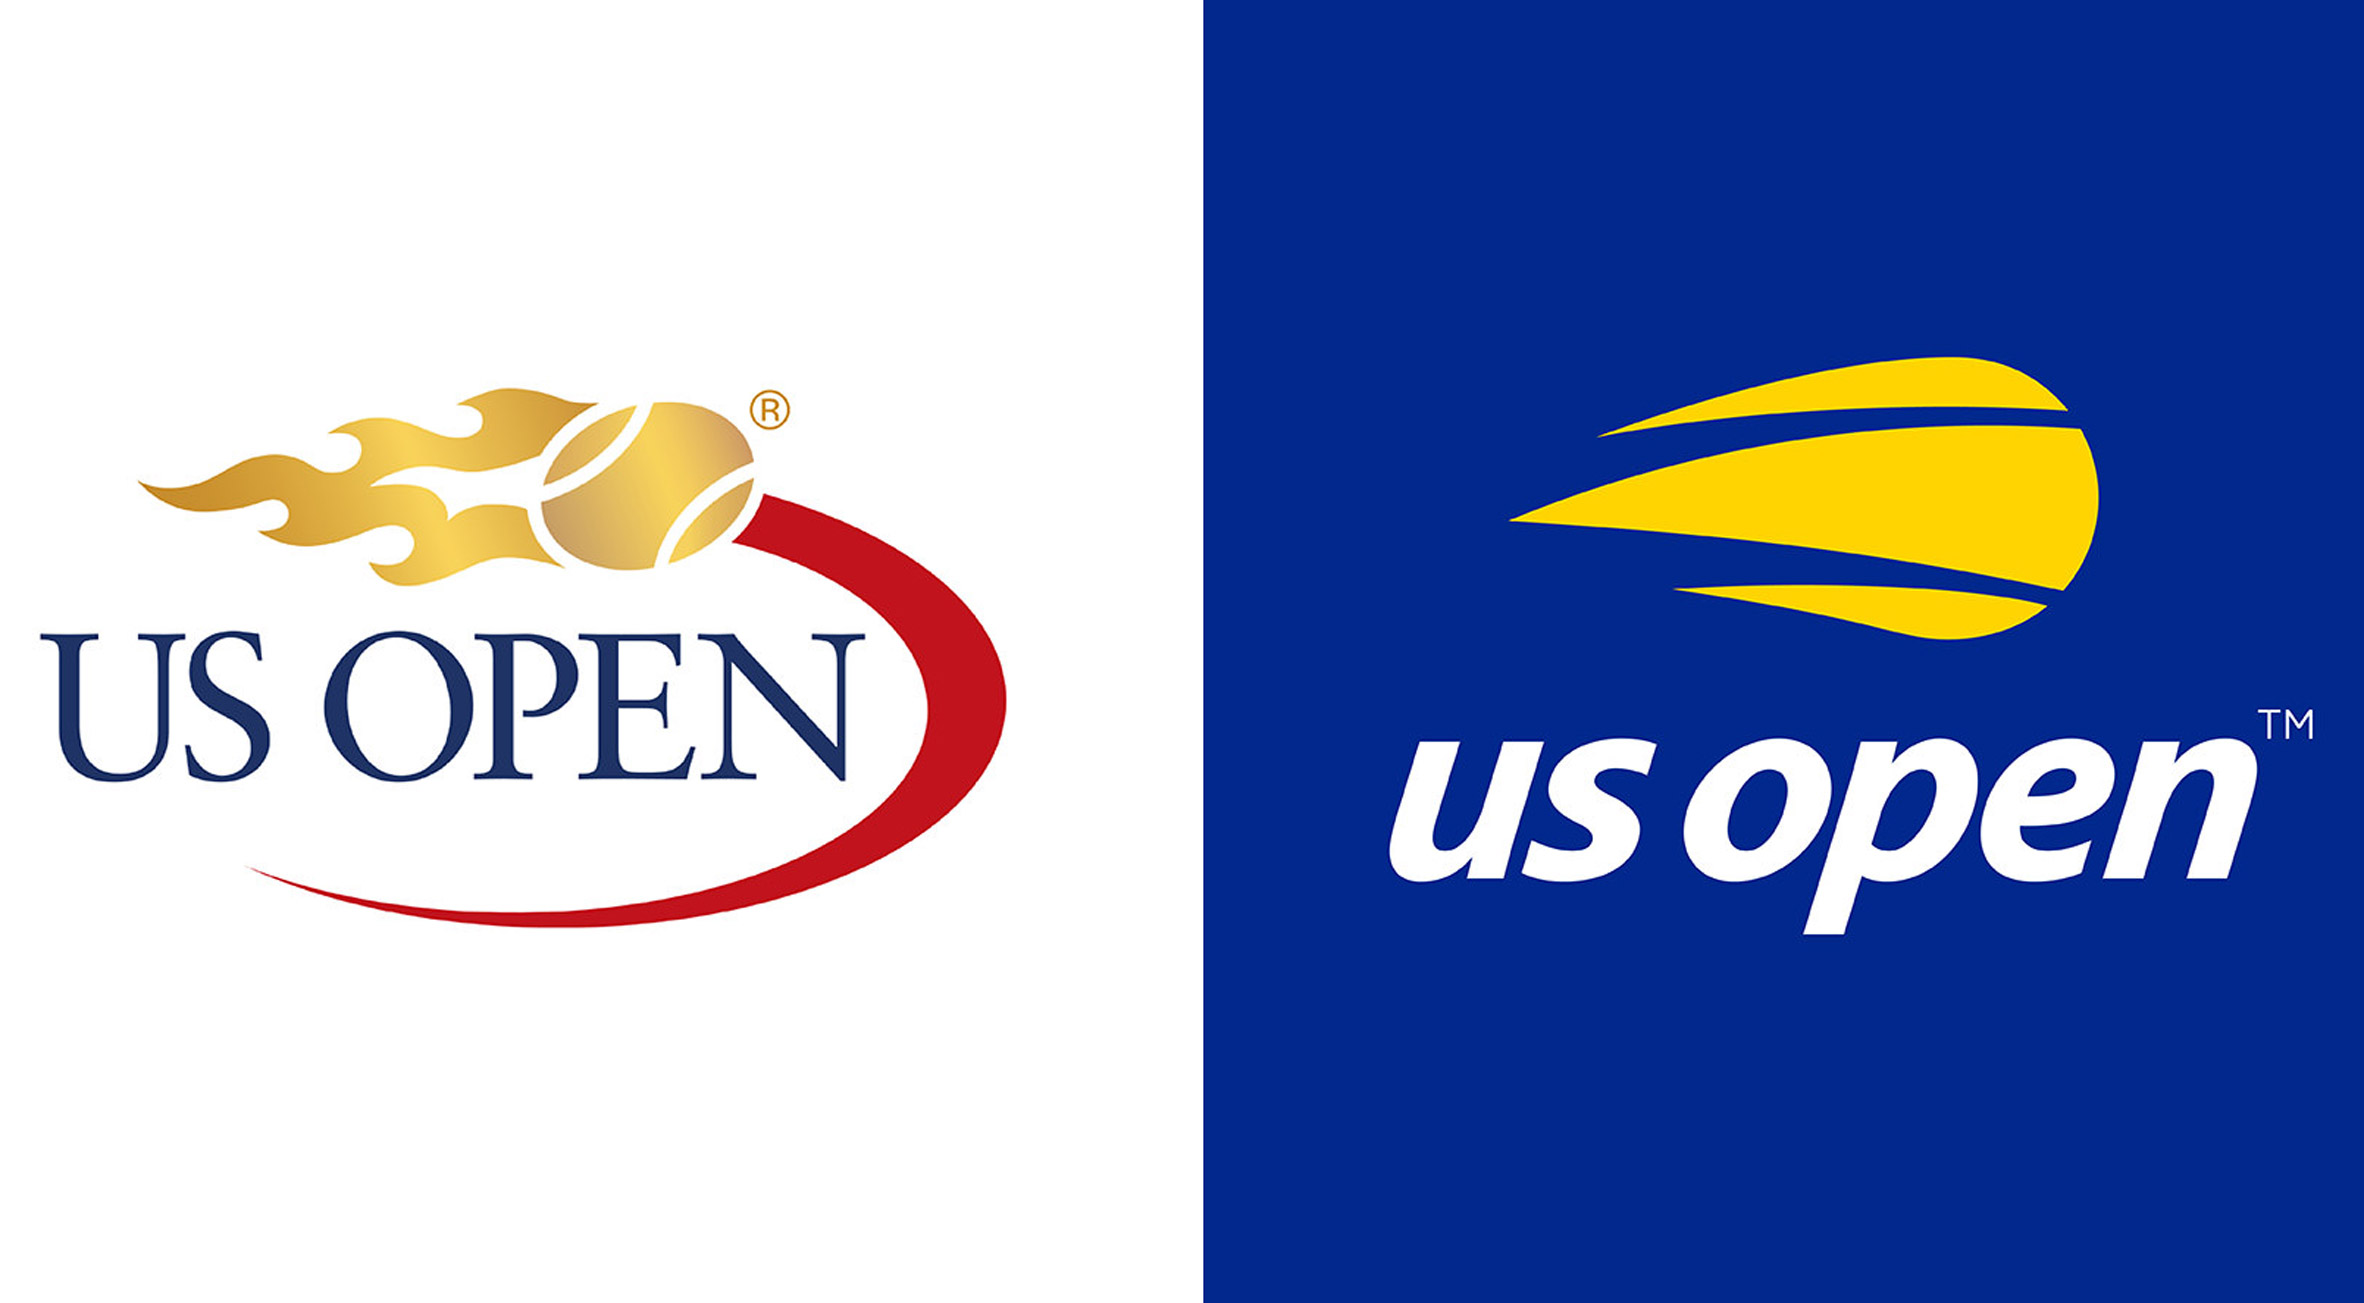 US Open's flaming tennis ball logo receives minimal update